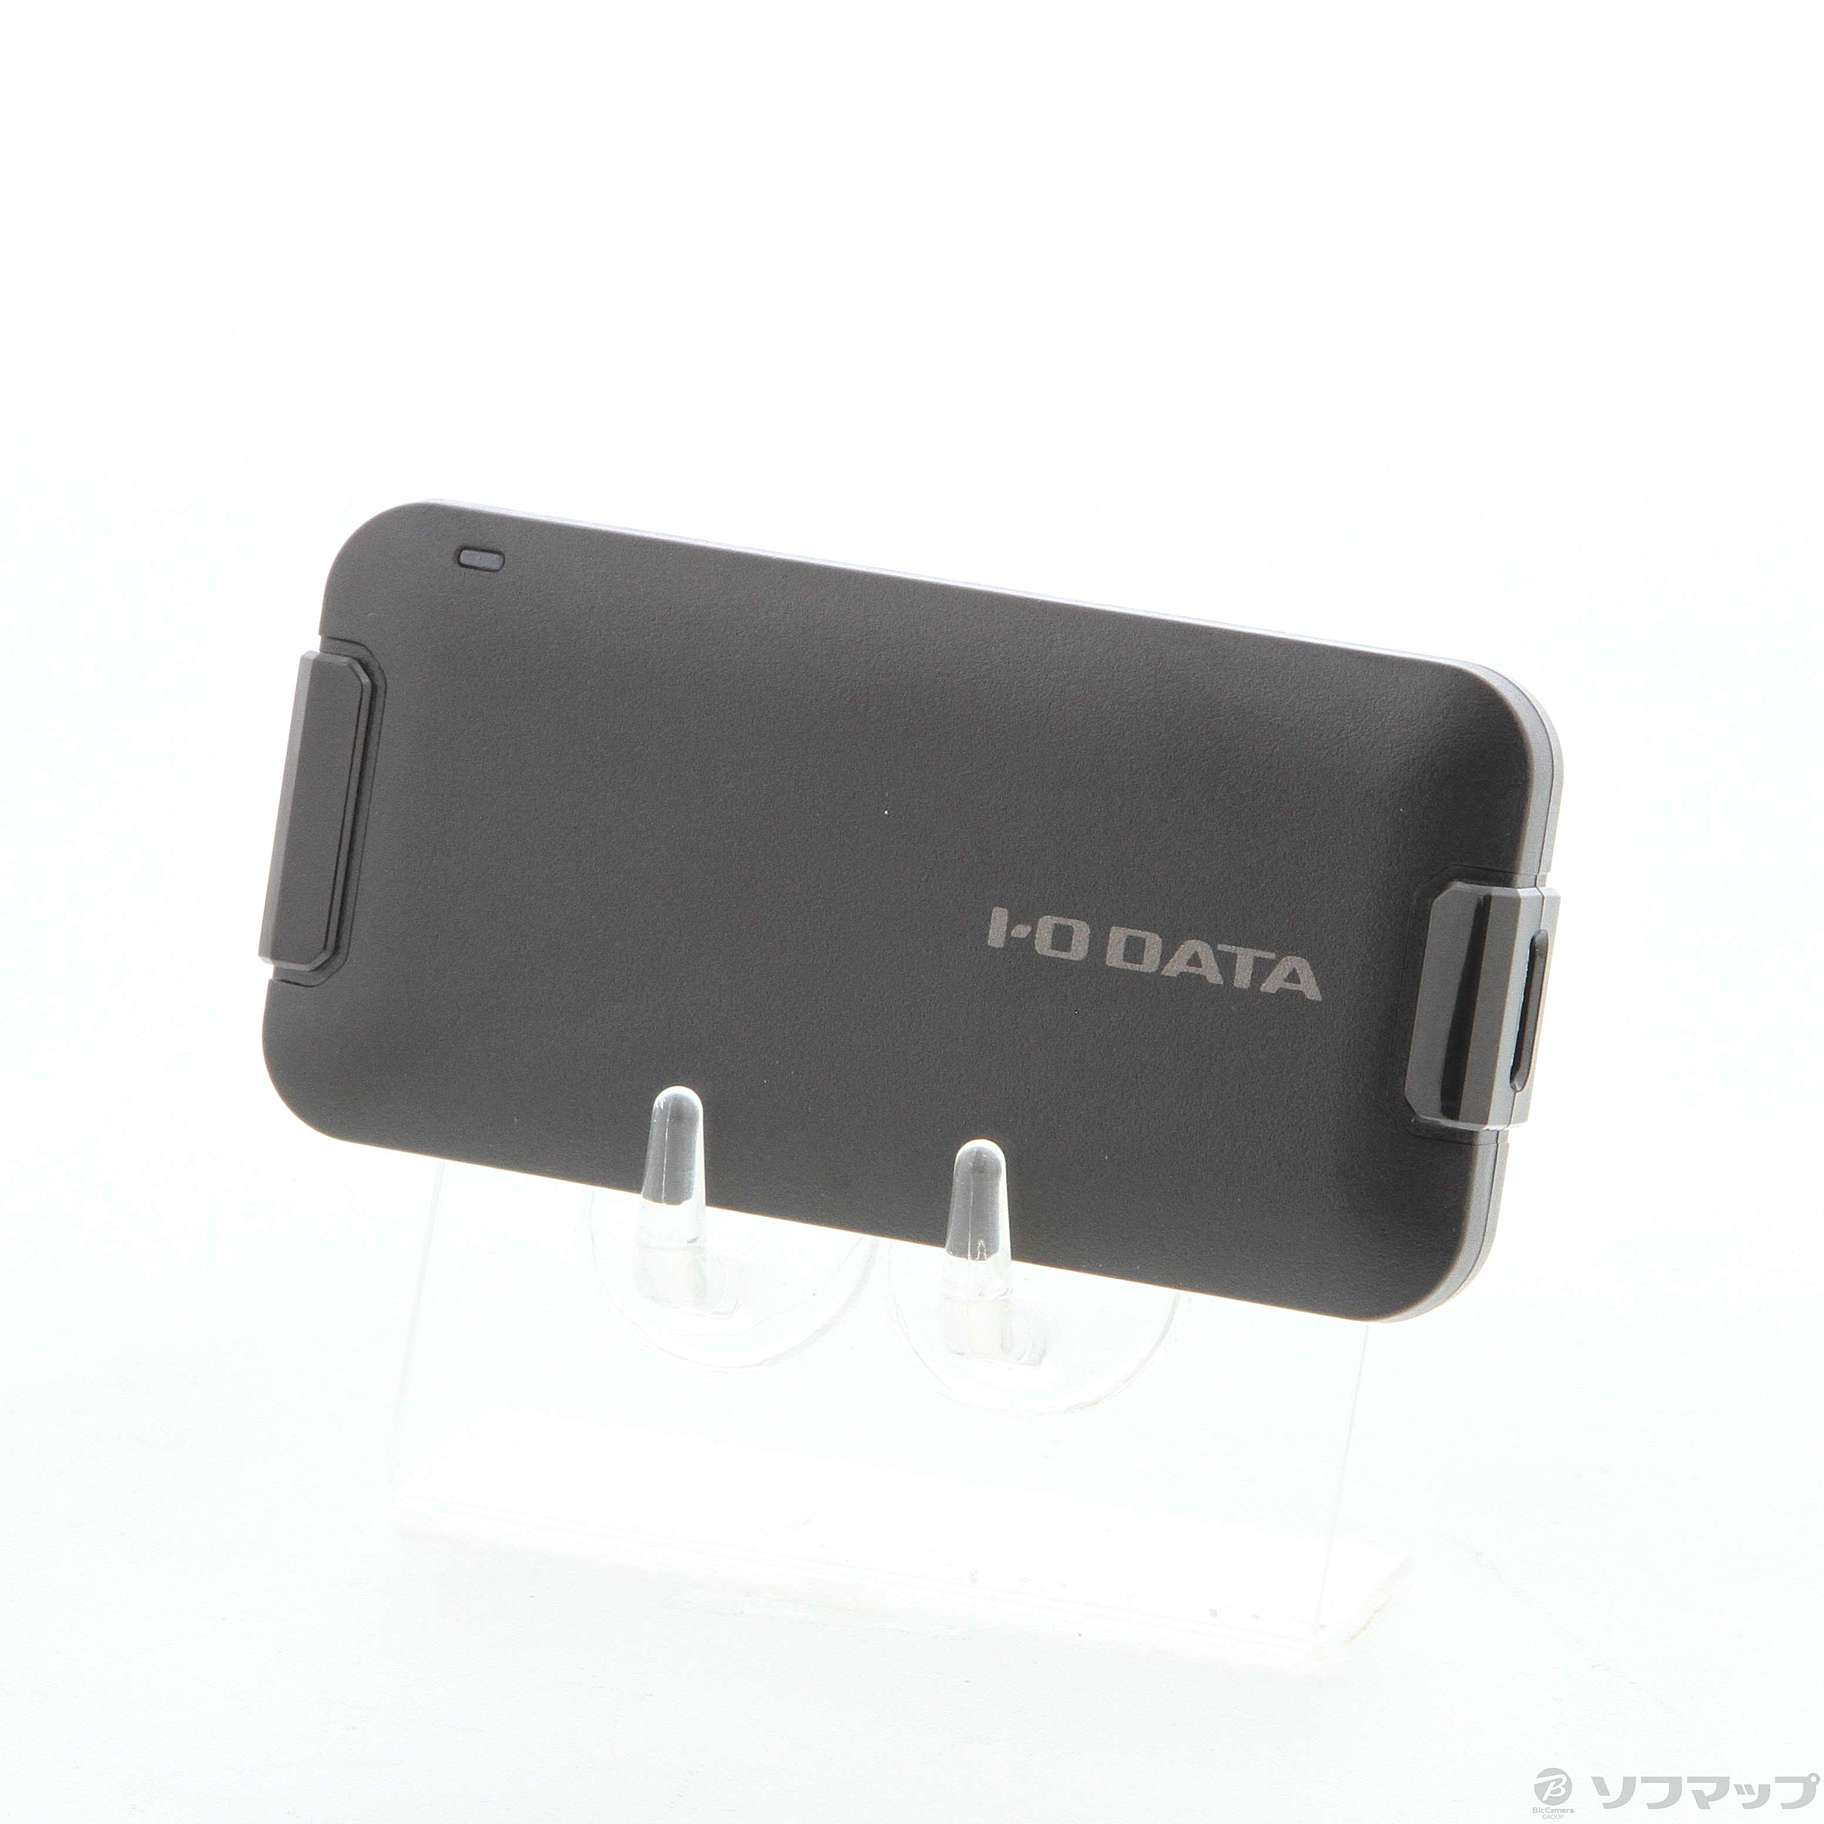 I-O DATA GV-HUVC  UVC(USB Video Class)対応